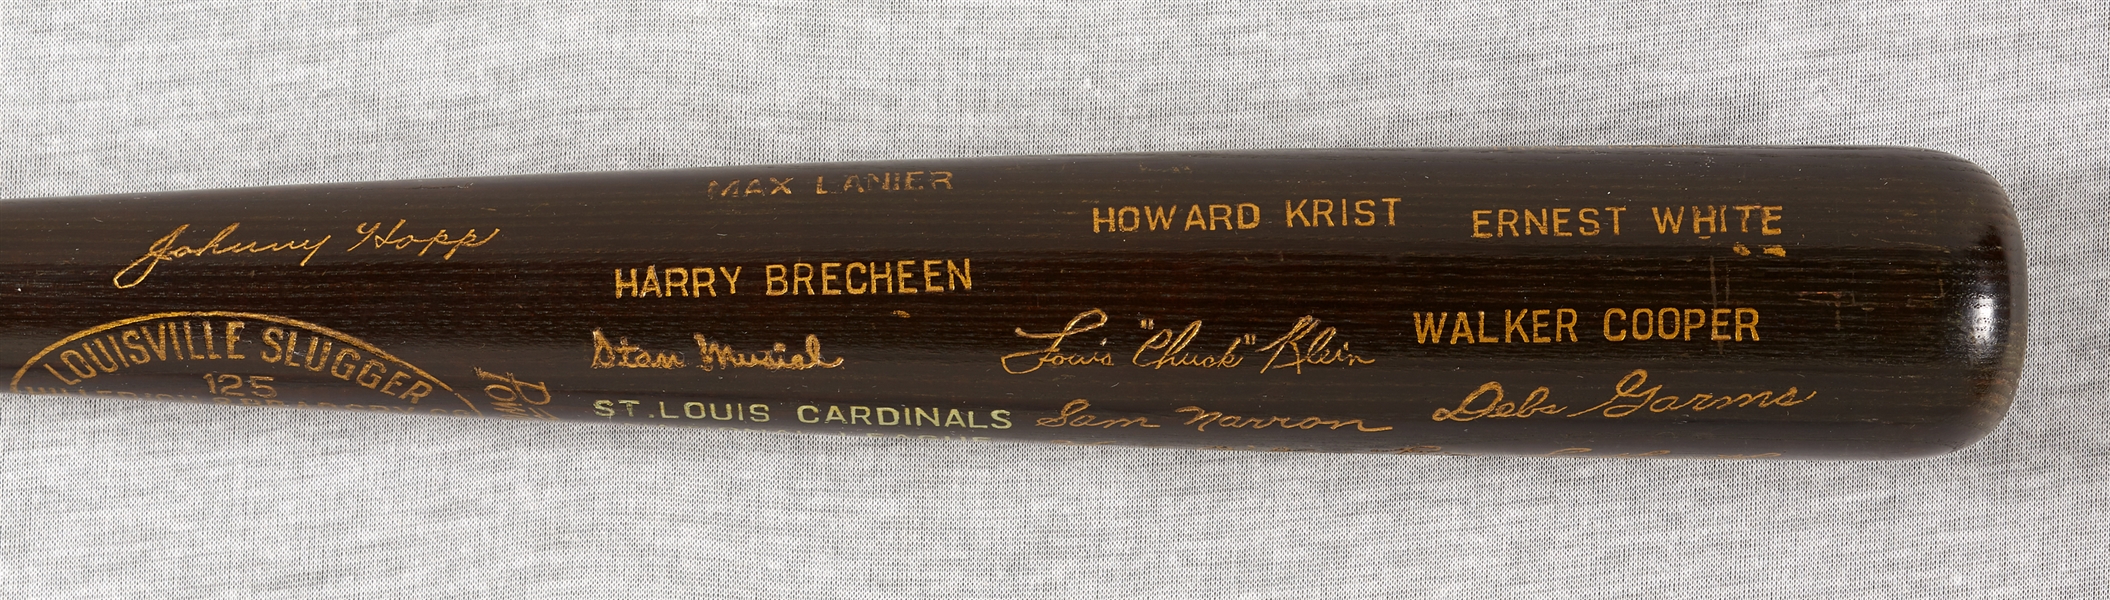 1943 St. Louis Cardinals H & B World Series Commemorative Black Bat